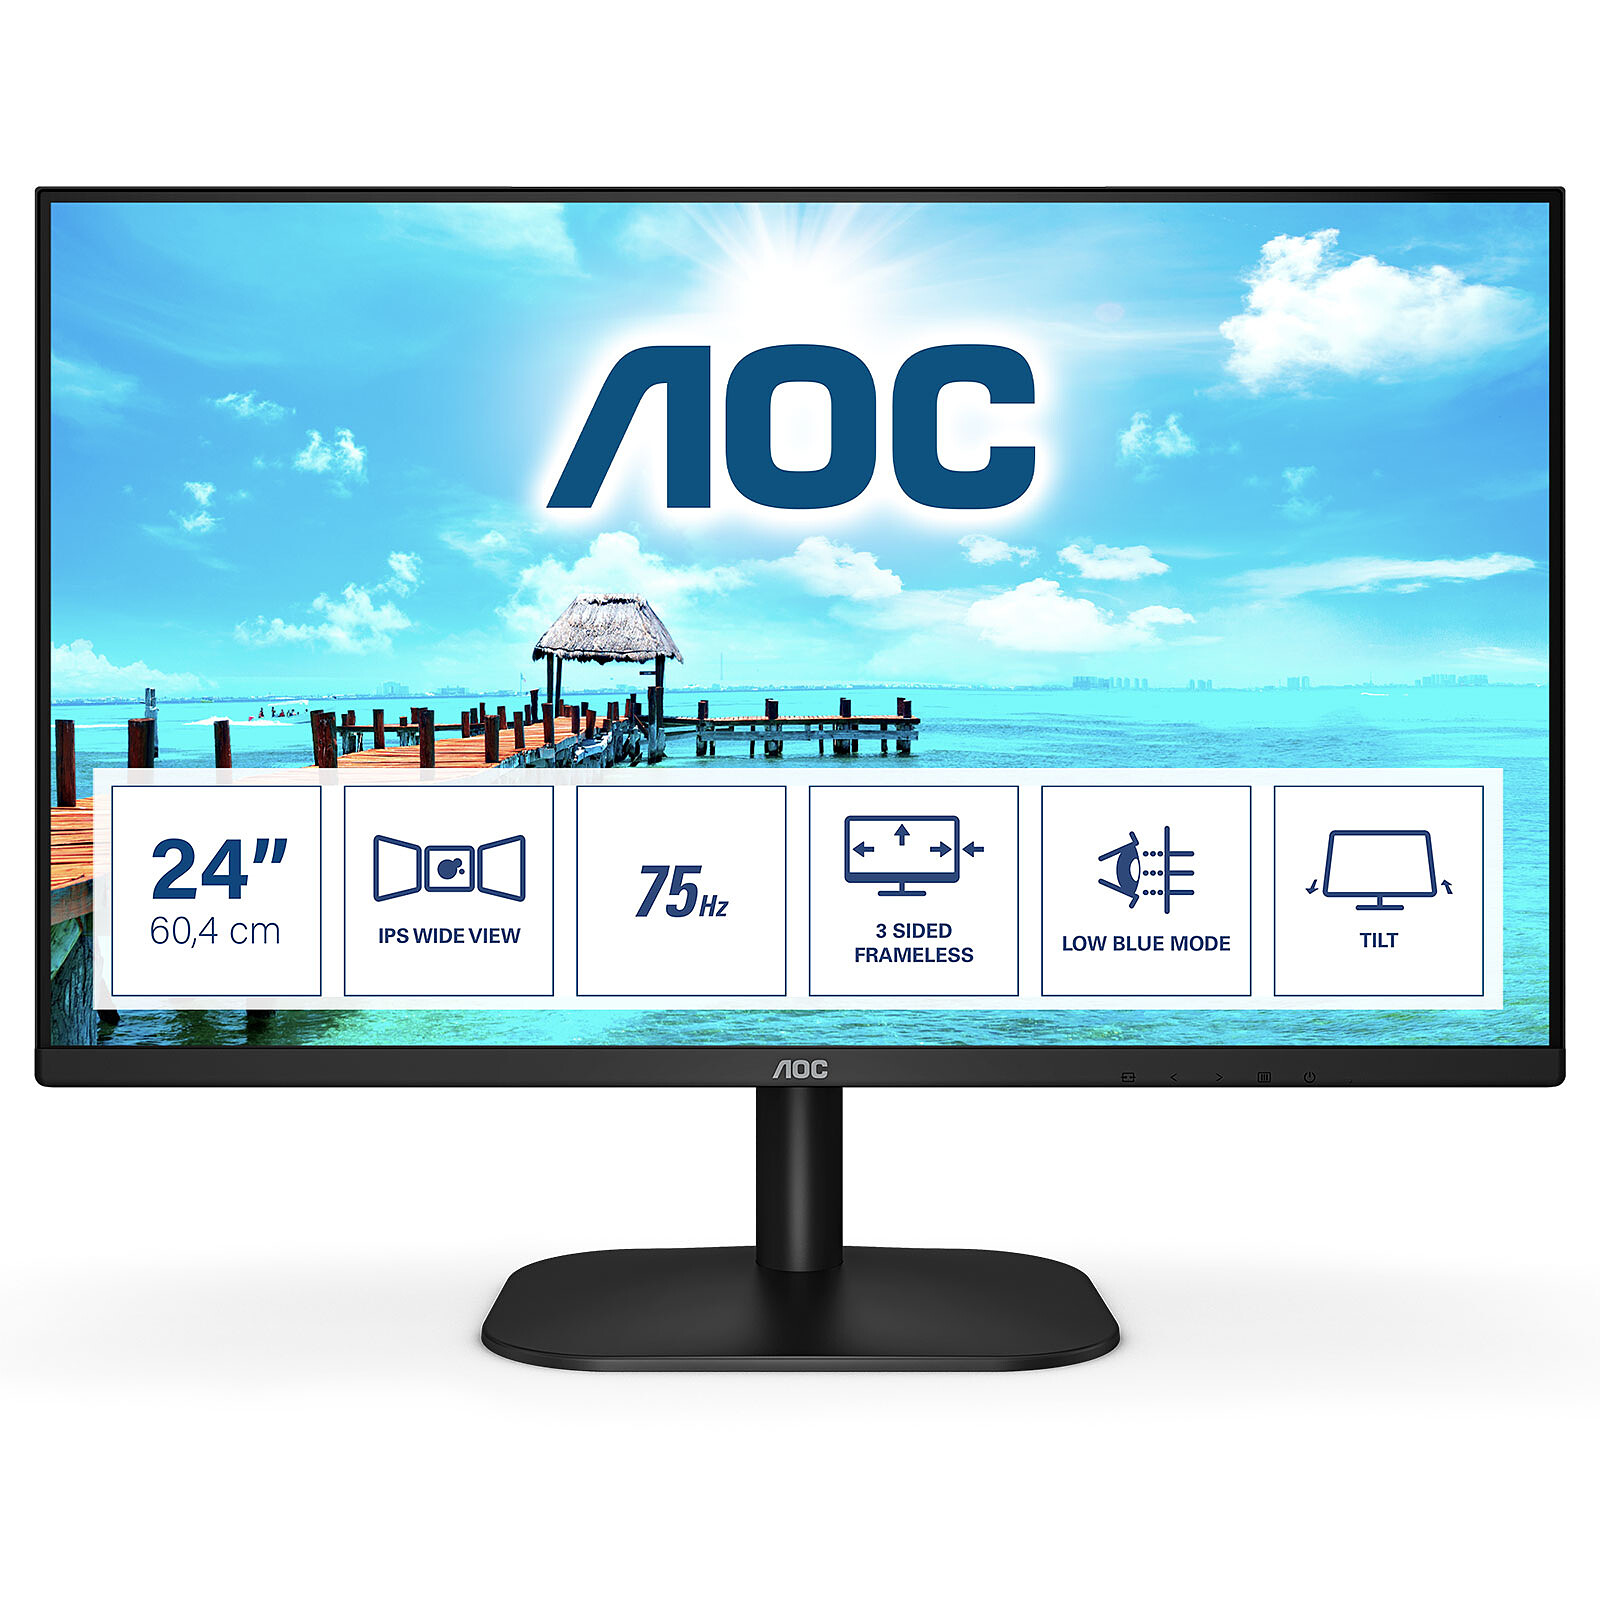 Stock Bureau - AOC Ecran PC LED 23,6 (59,94 cm) 1920 x 1080 2 ms VGA/HDMI  Noir